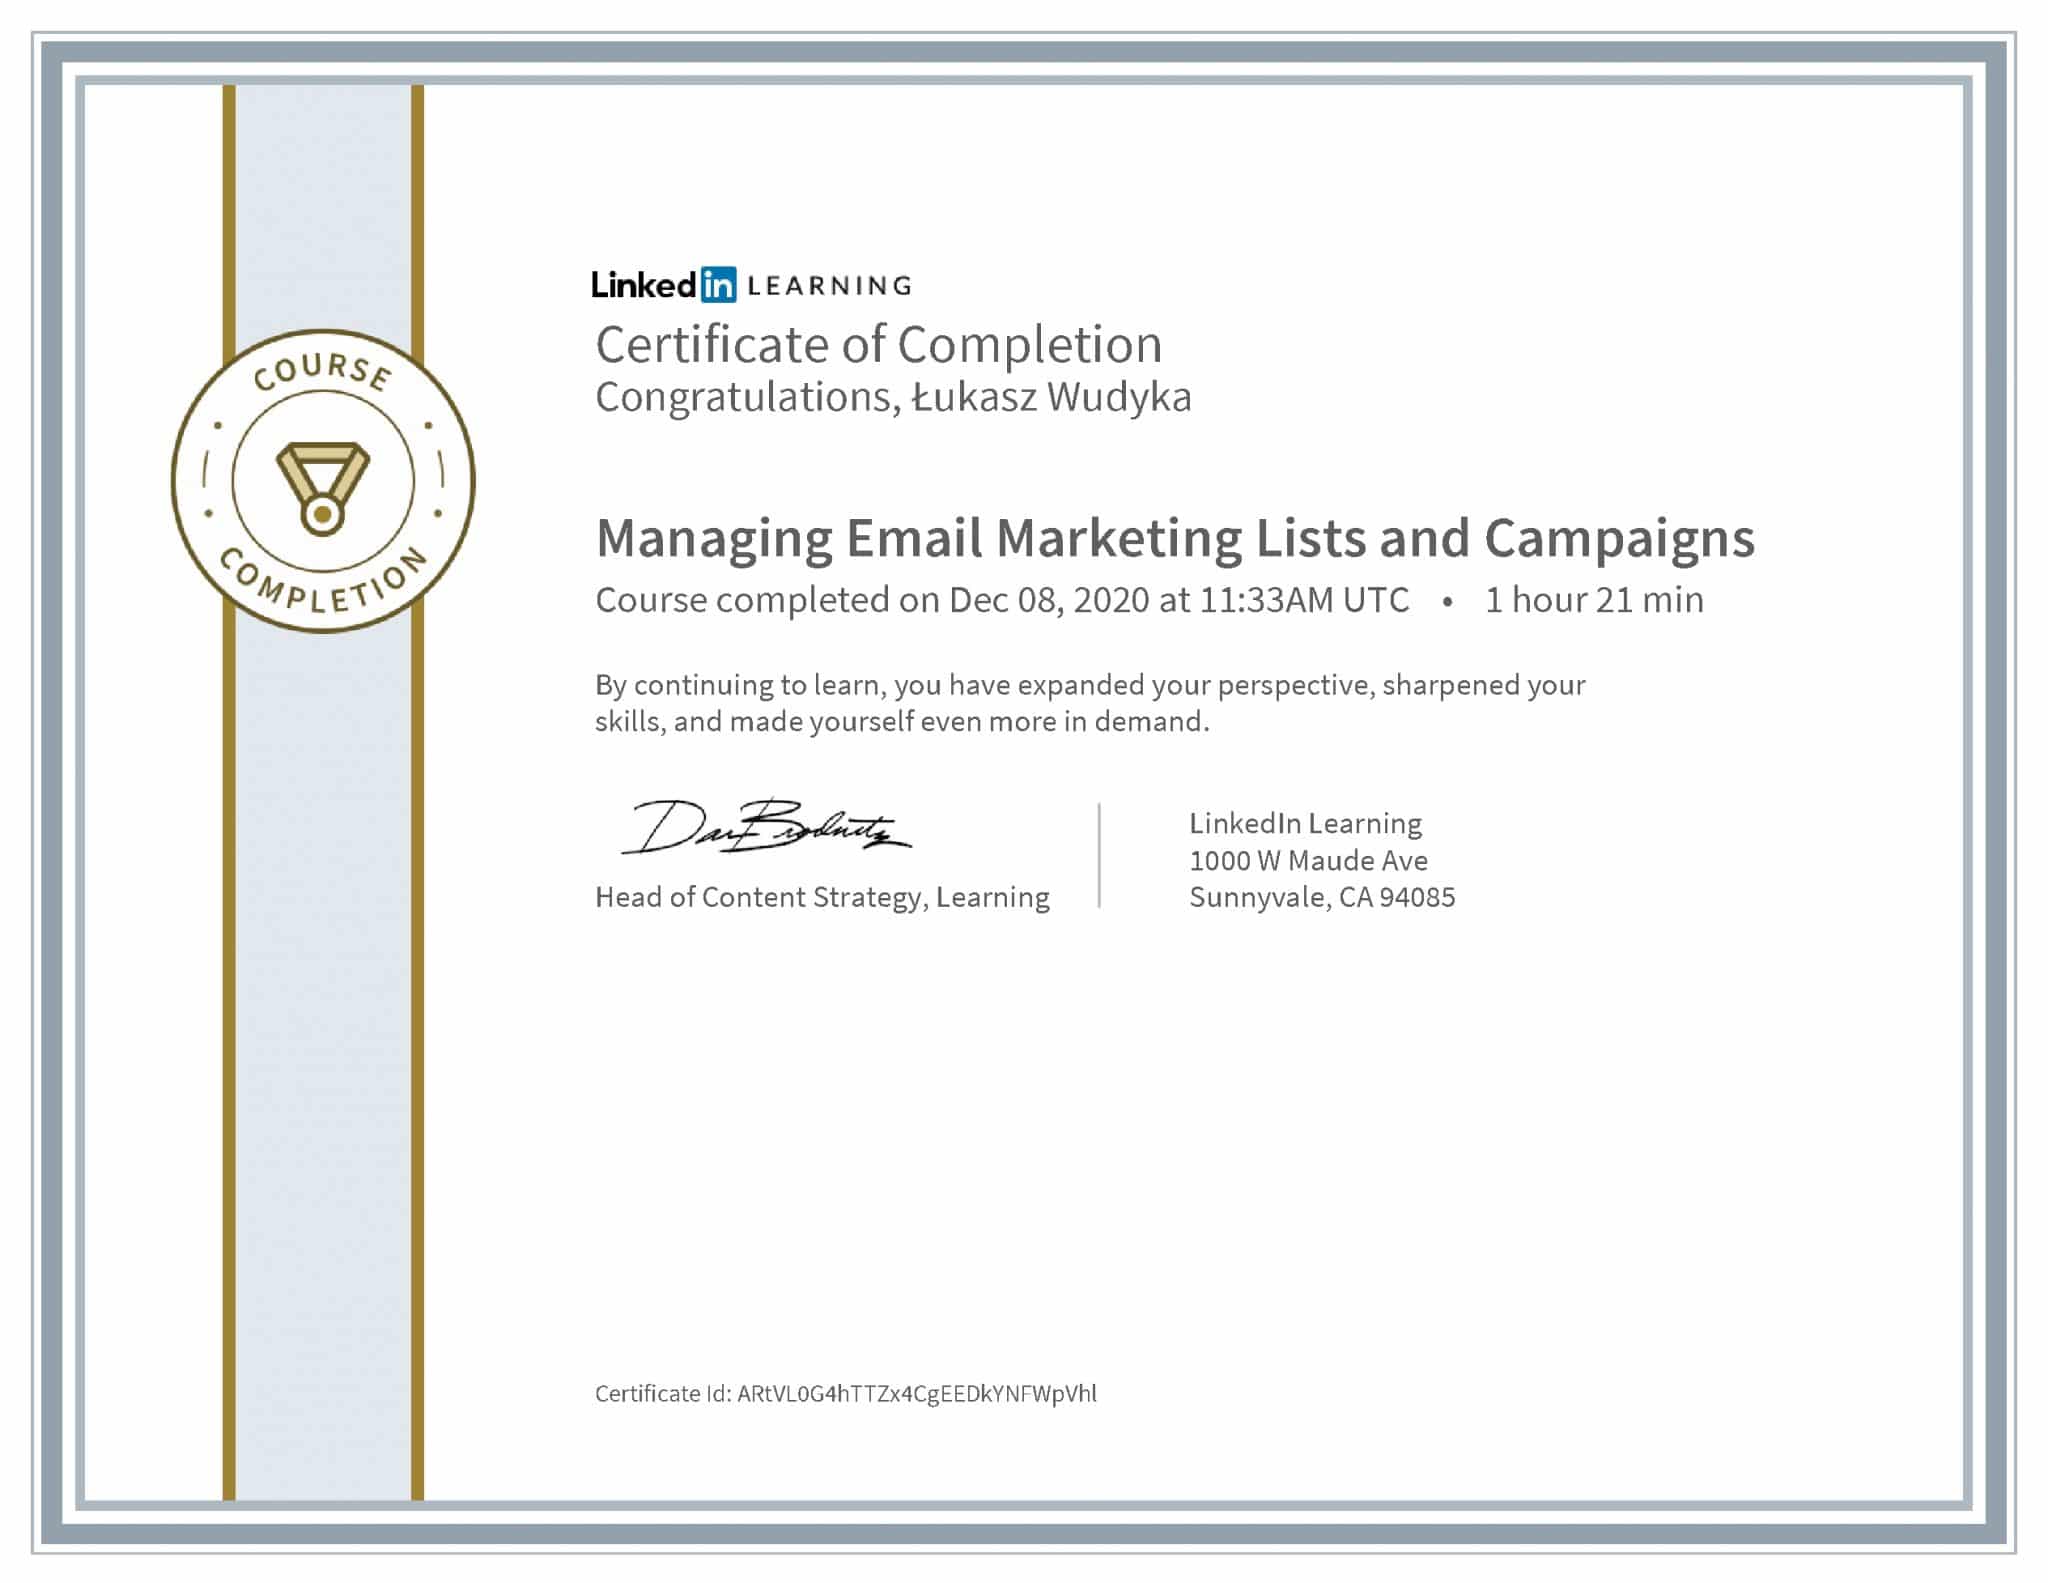 Łukasz Wudyka certyfikat LinkedIn Managing Email Marketing Lists and Campaigns